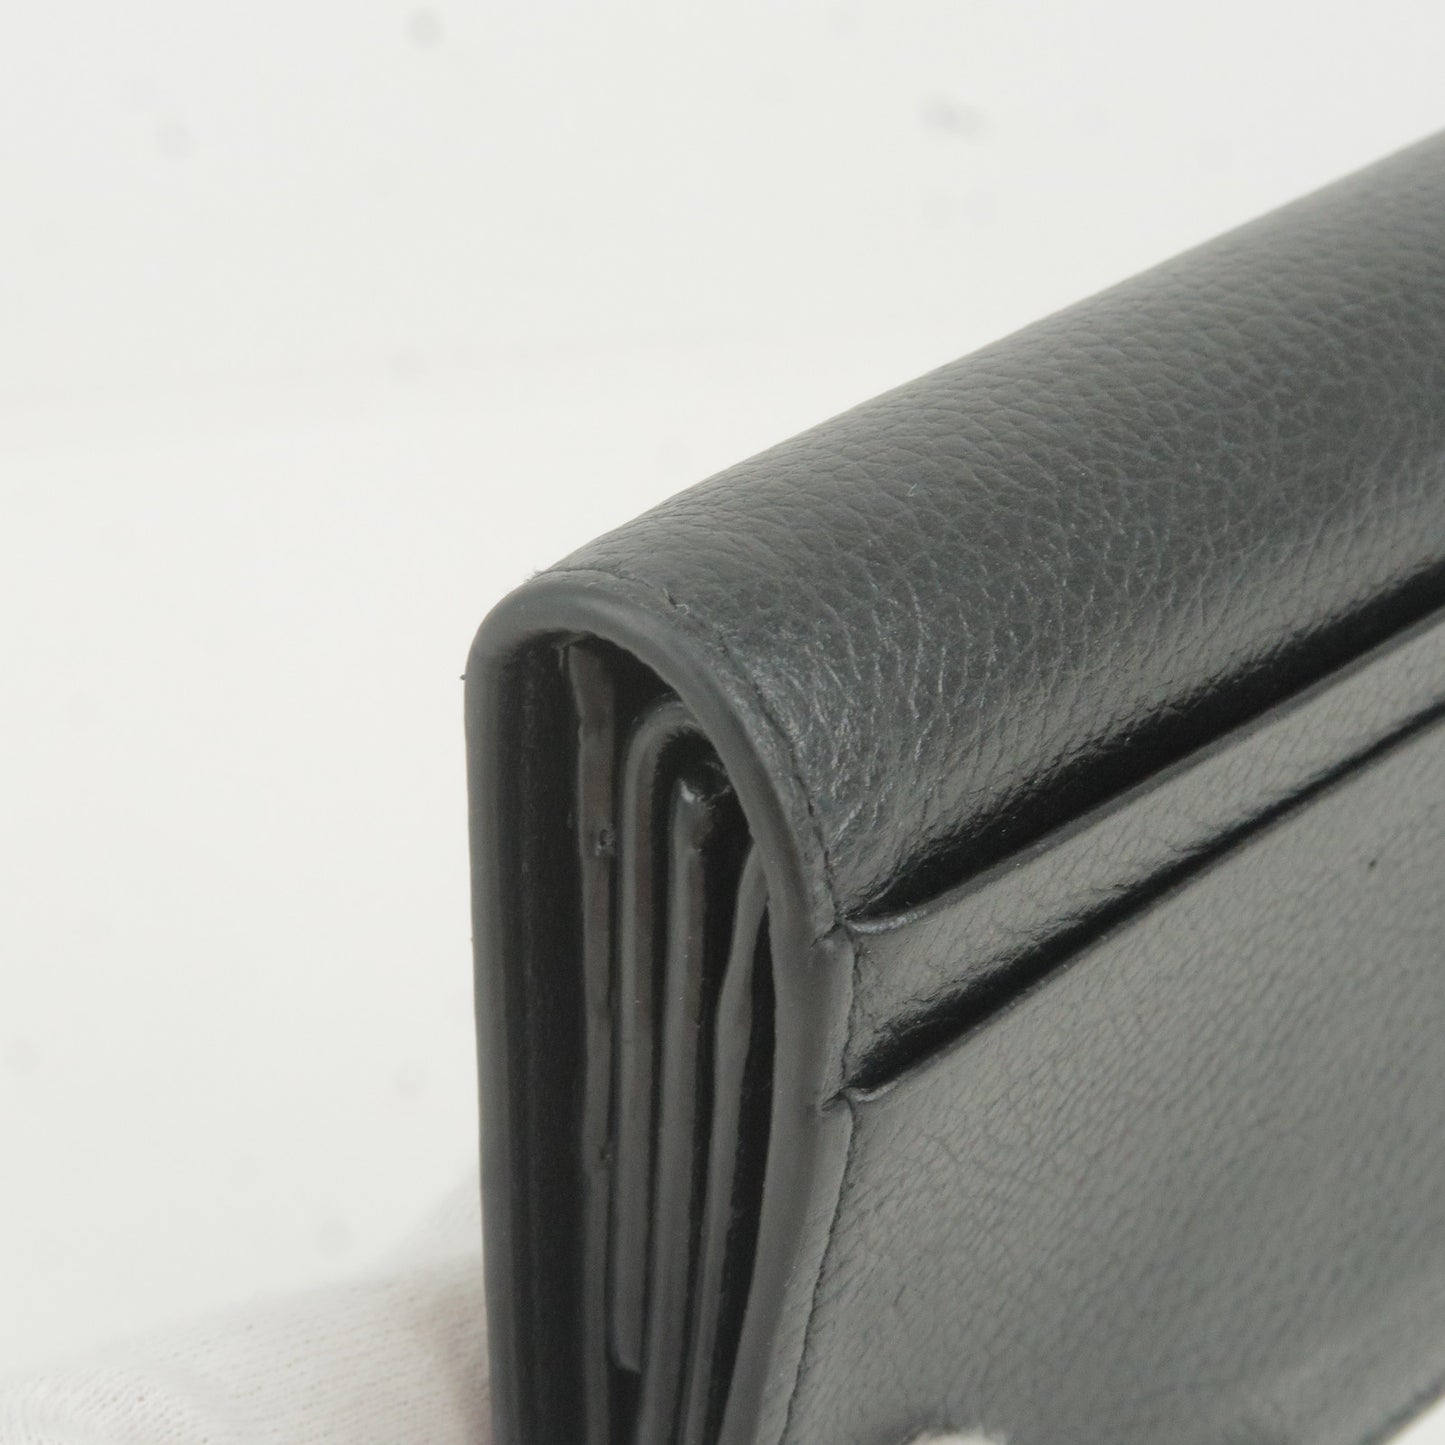 BALENCIAGA Leather Cash Bi-Fold Mini Wallet Black 594216